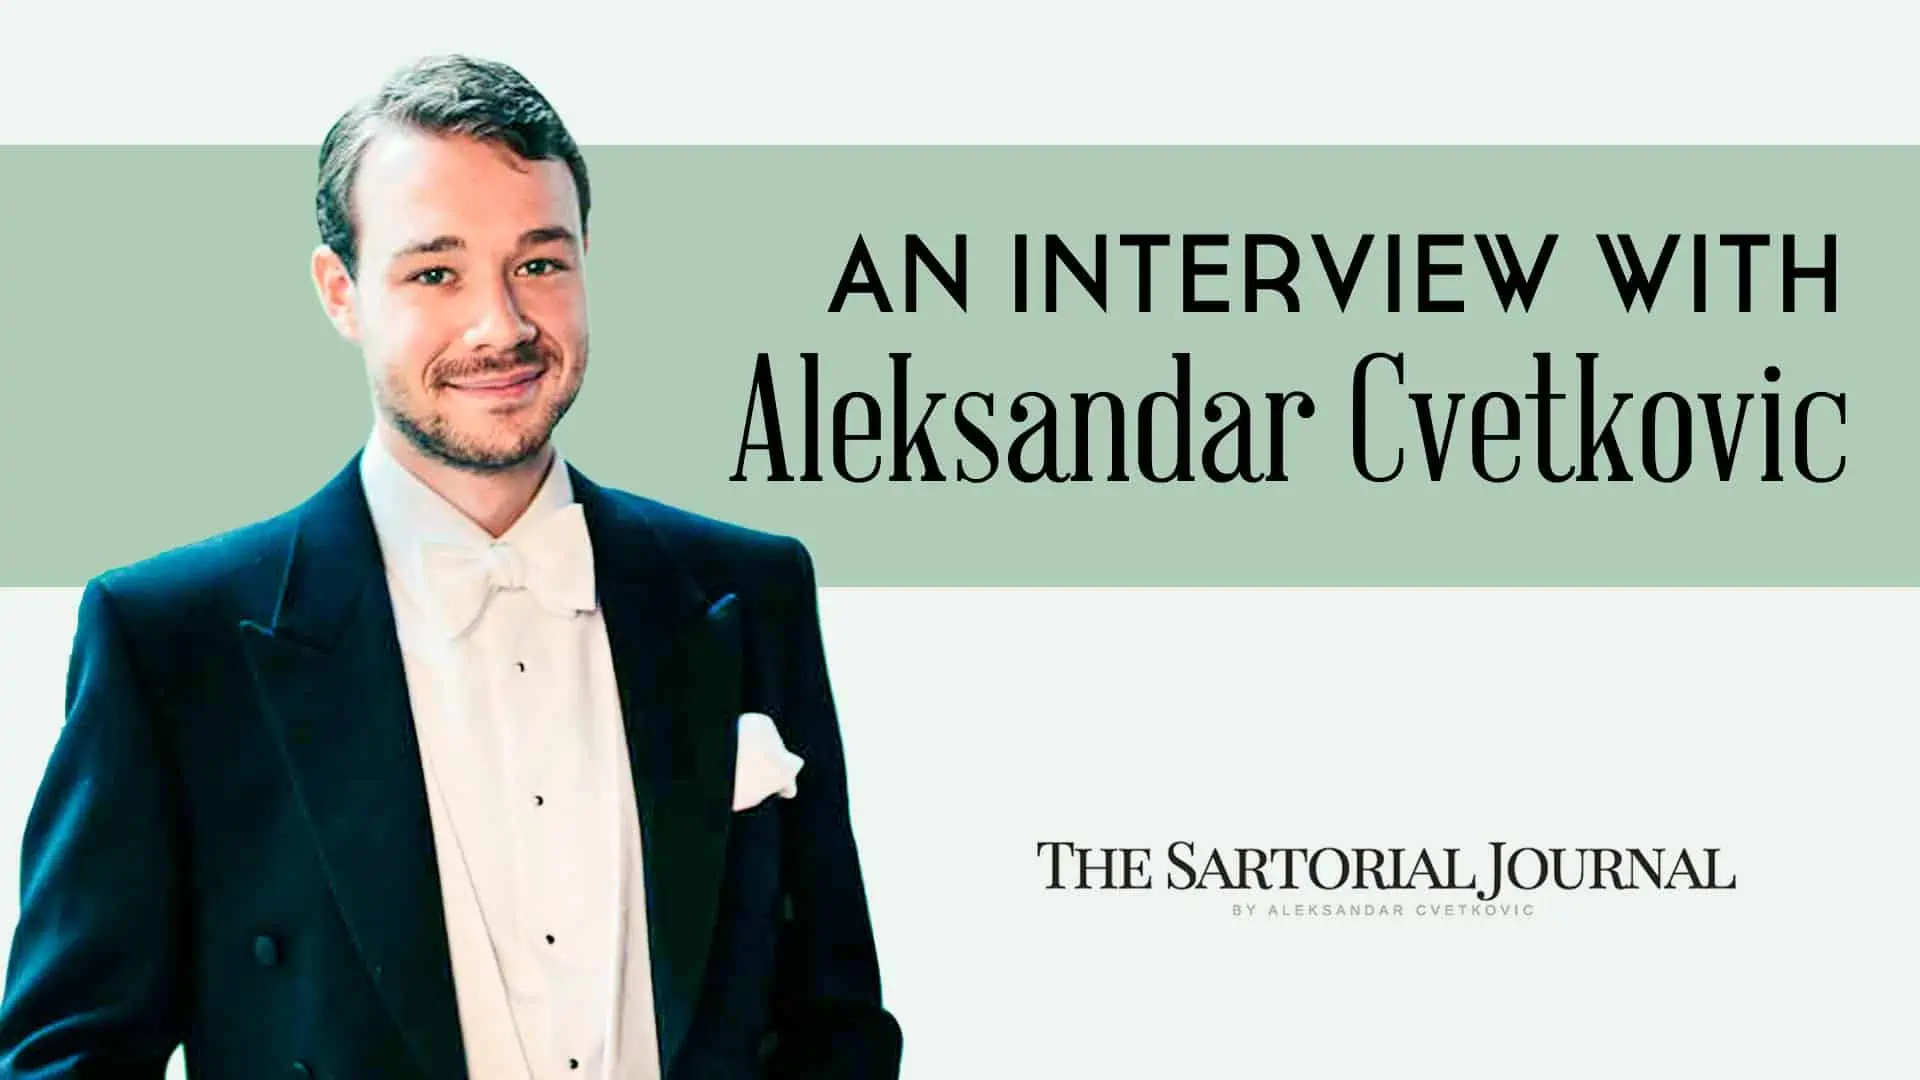 nterview with Aleksandar Cvetkovic of The Sartorial Journal